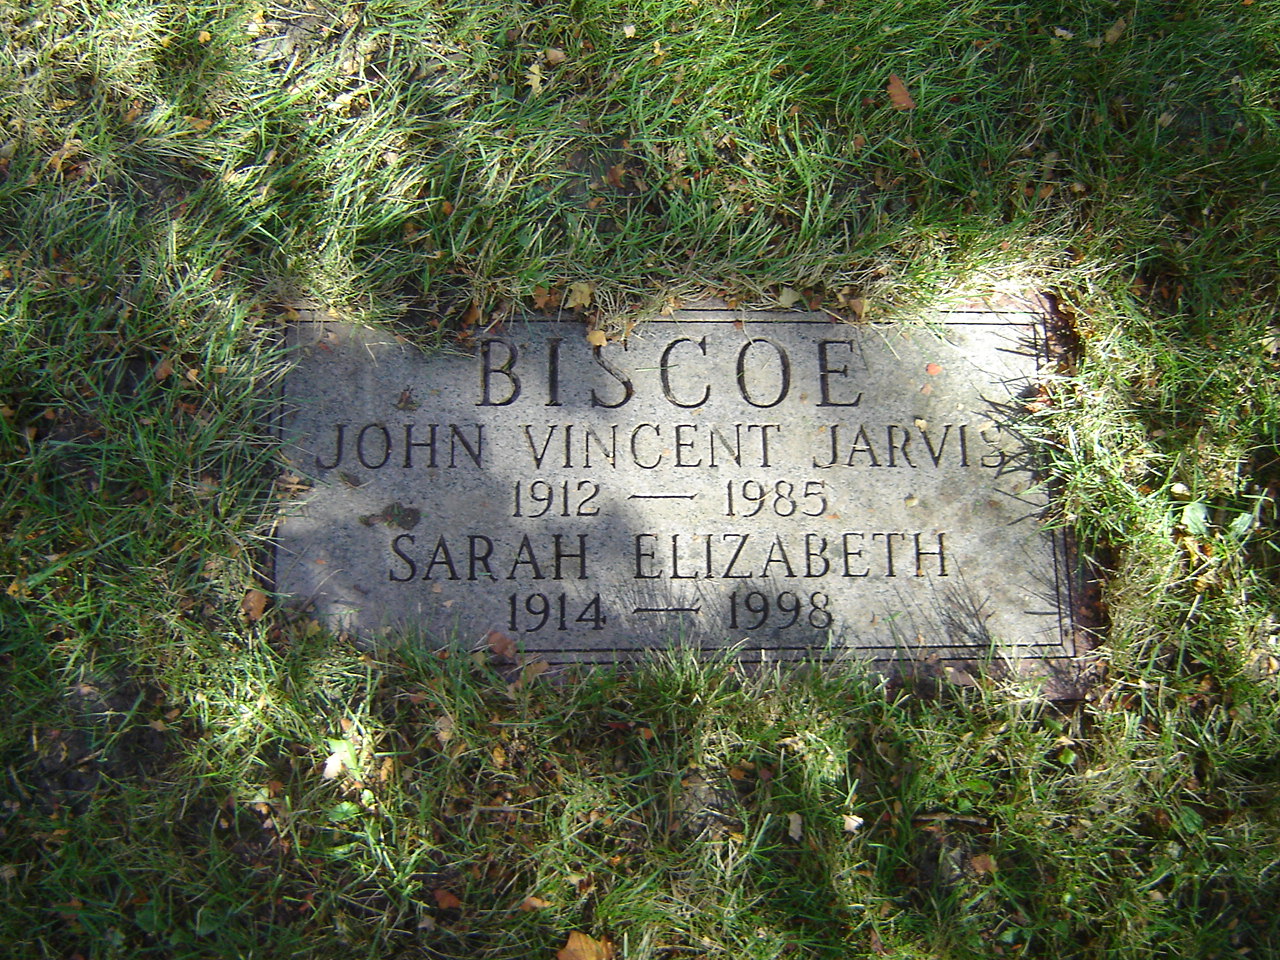 J. Biscoe (Grave)